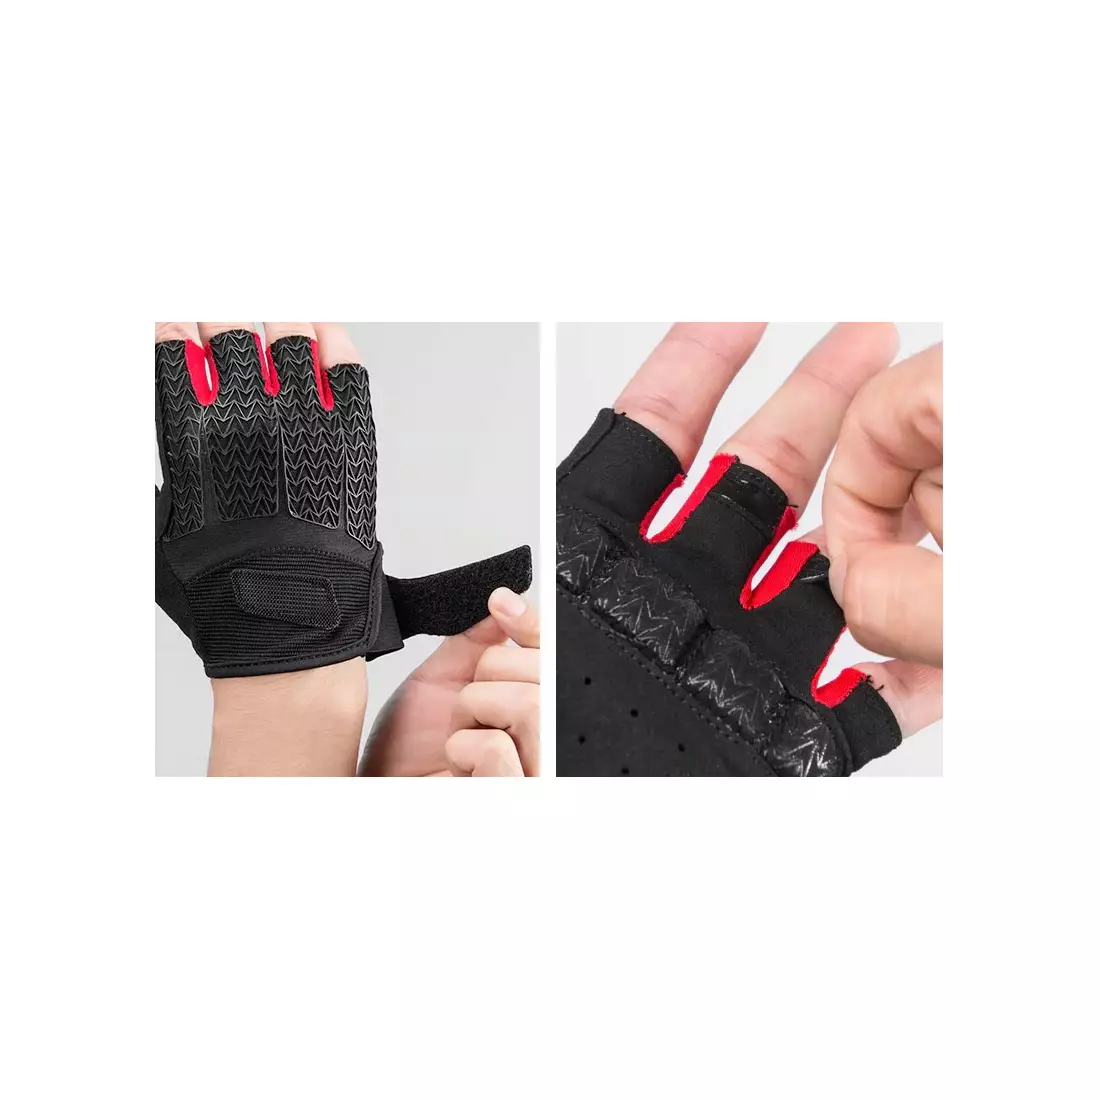 Rockbros mănuși de ciclism deget scurt, negru-roșu S169BR